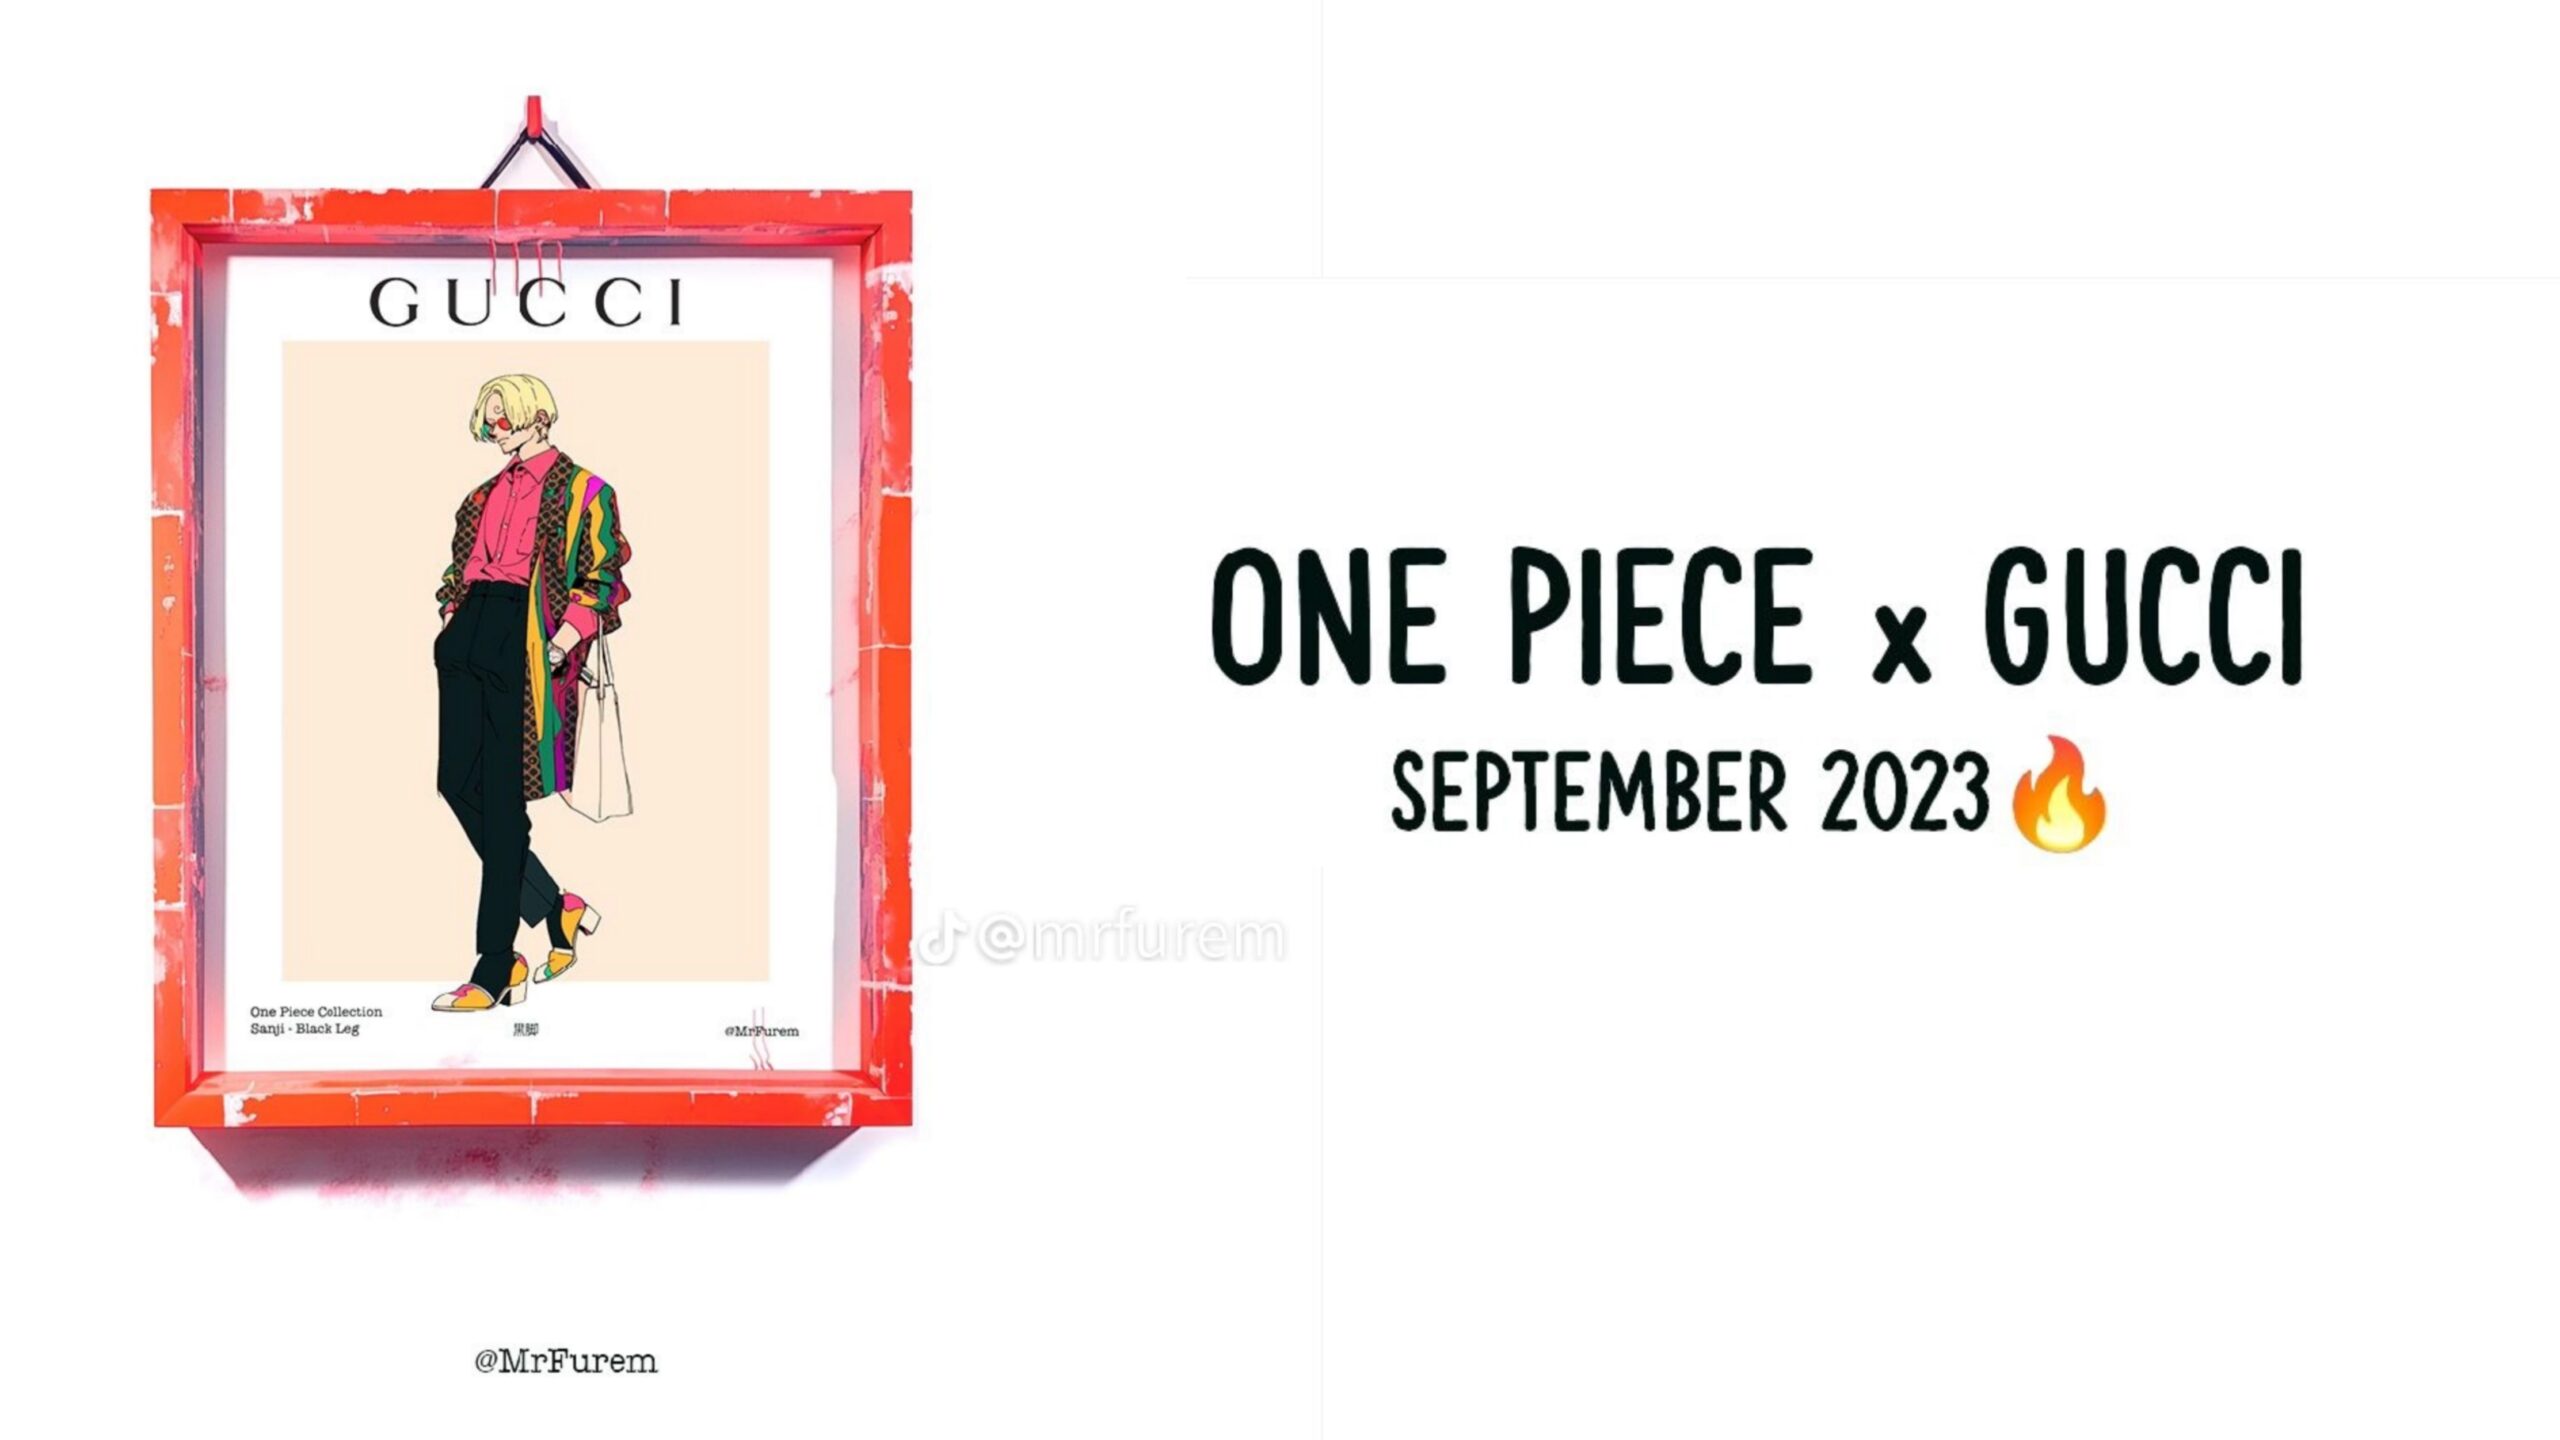 One Piece x Gucci